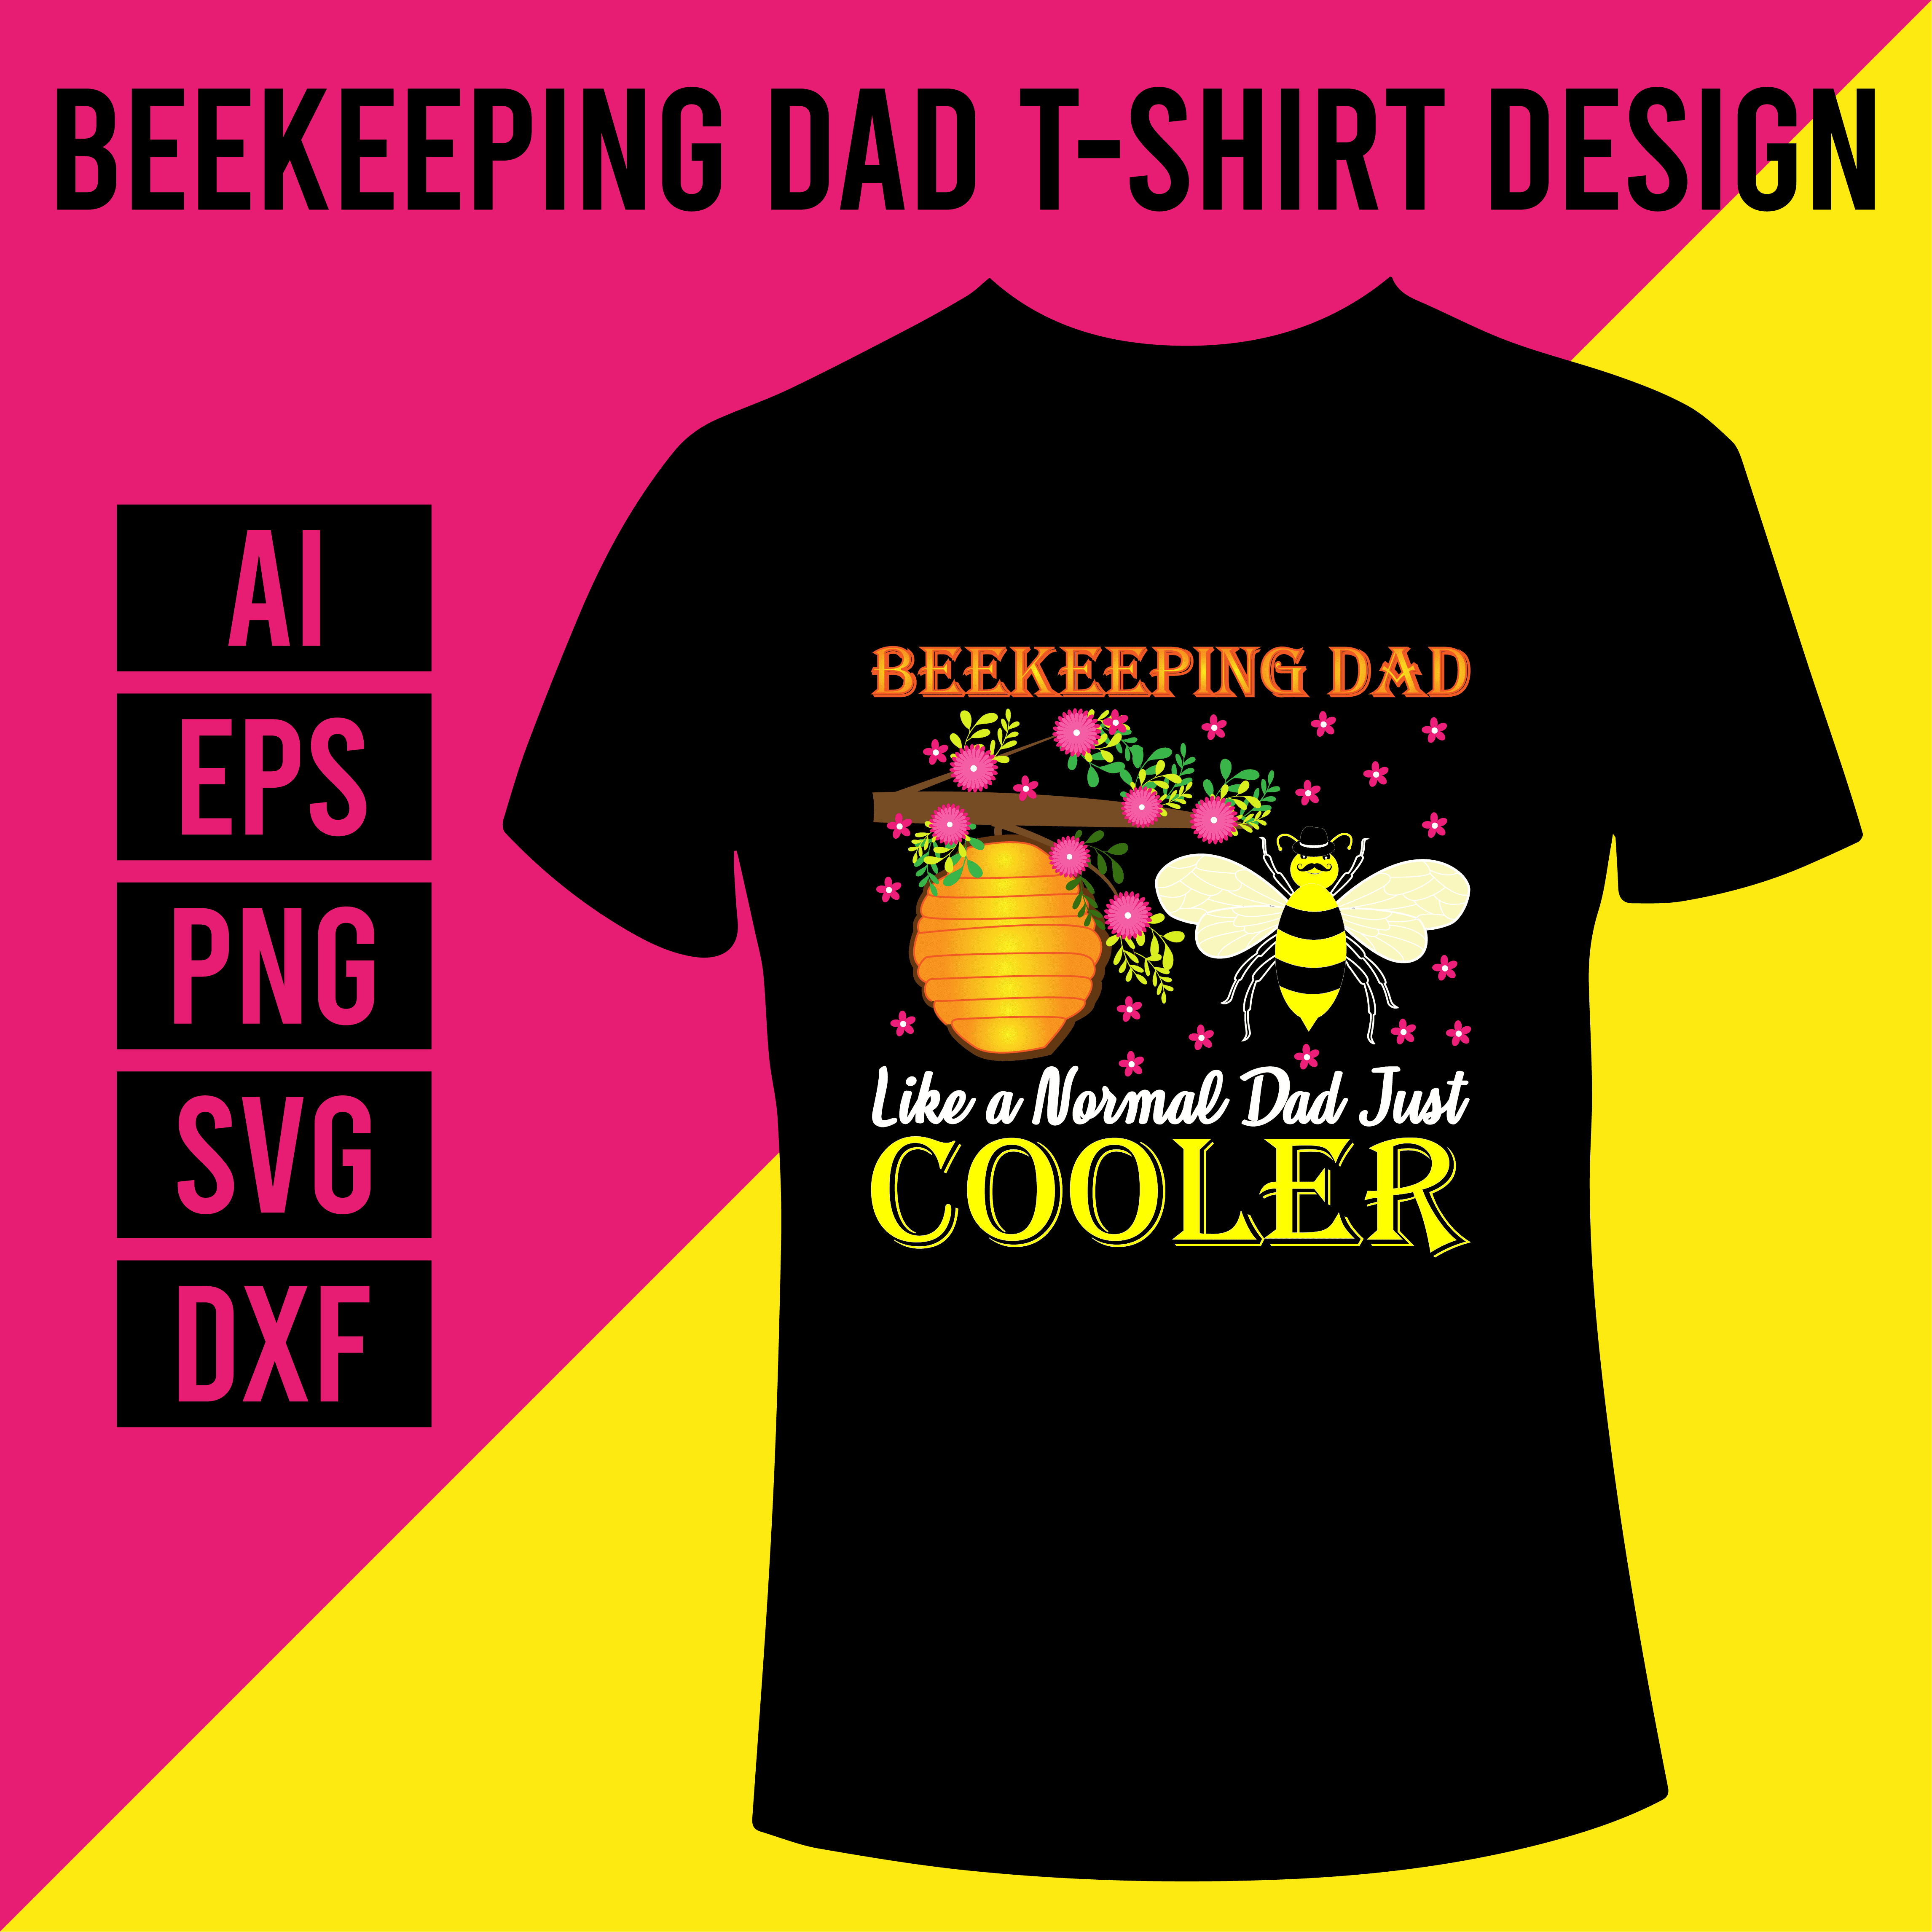 Beekeeping Dad T- Shirt Design main cover.